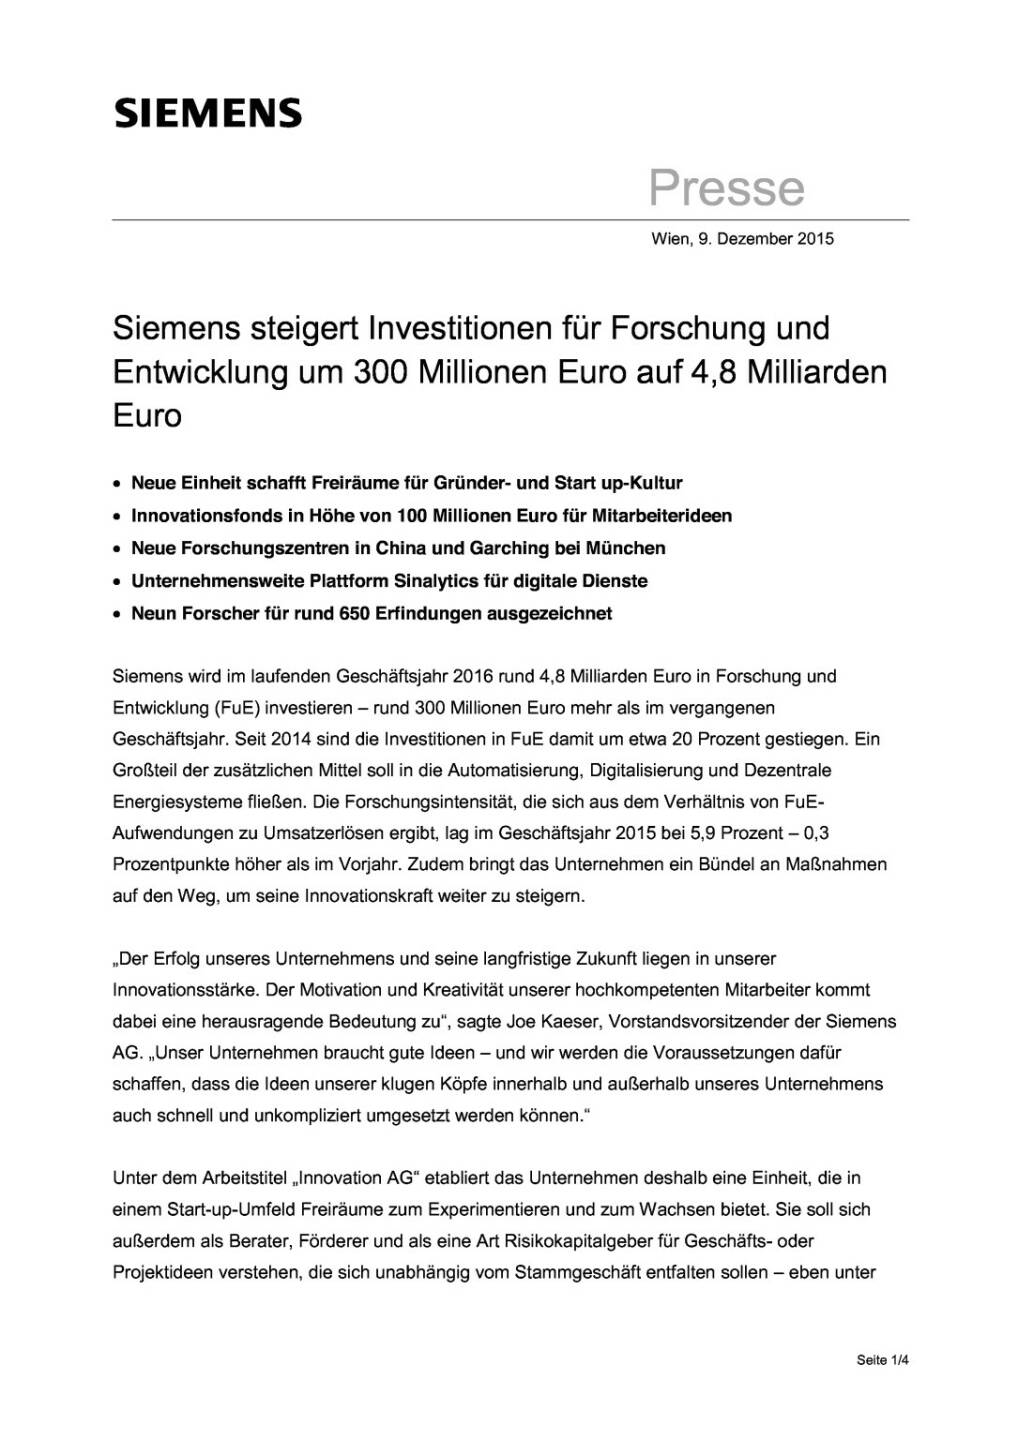 Siemens steigert Investitionen für Forschung und Entwicklung , Seite 1/4, komplettes Dokument unter http://boerse-social.com/static/uploads/file_514_siemens_steigert_investitionen_für_forschung_und_entwicklung.pdf